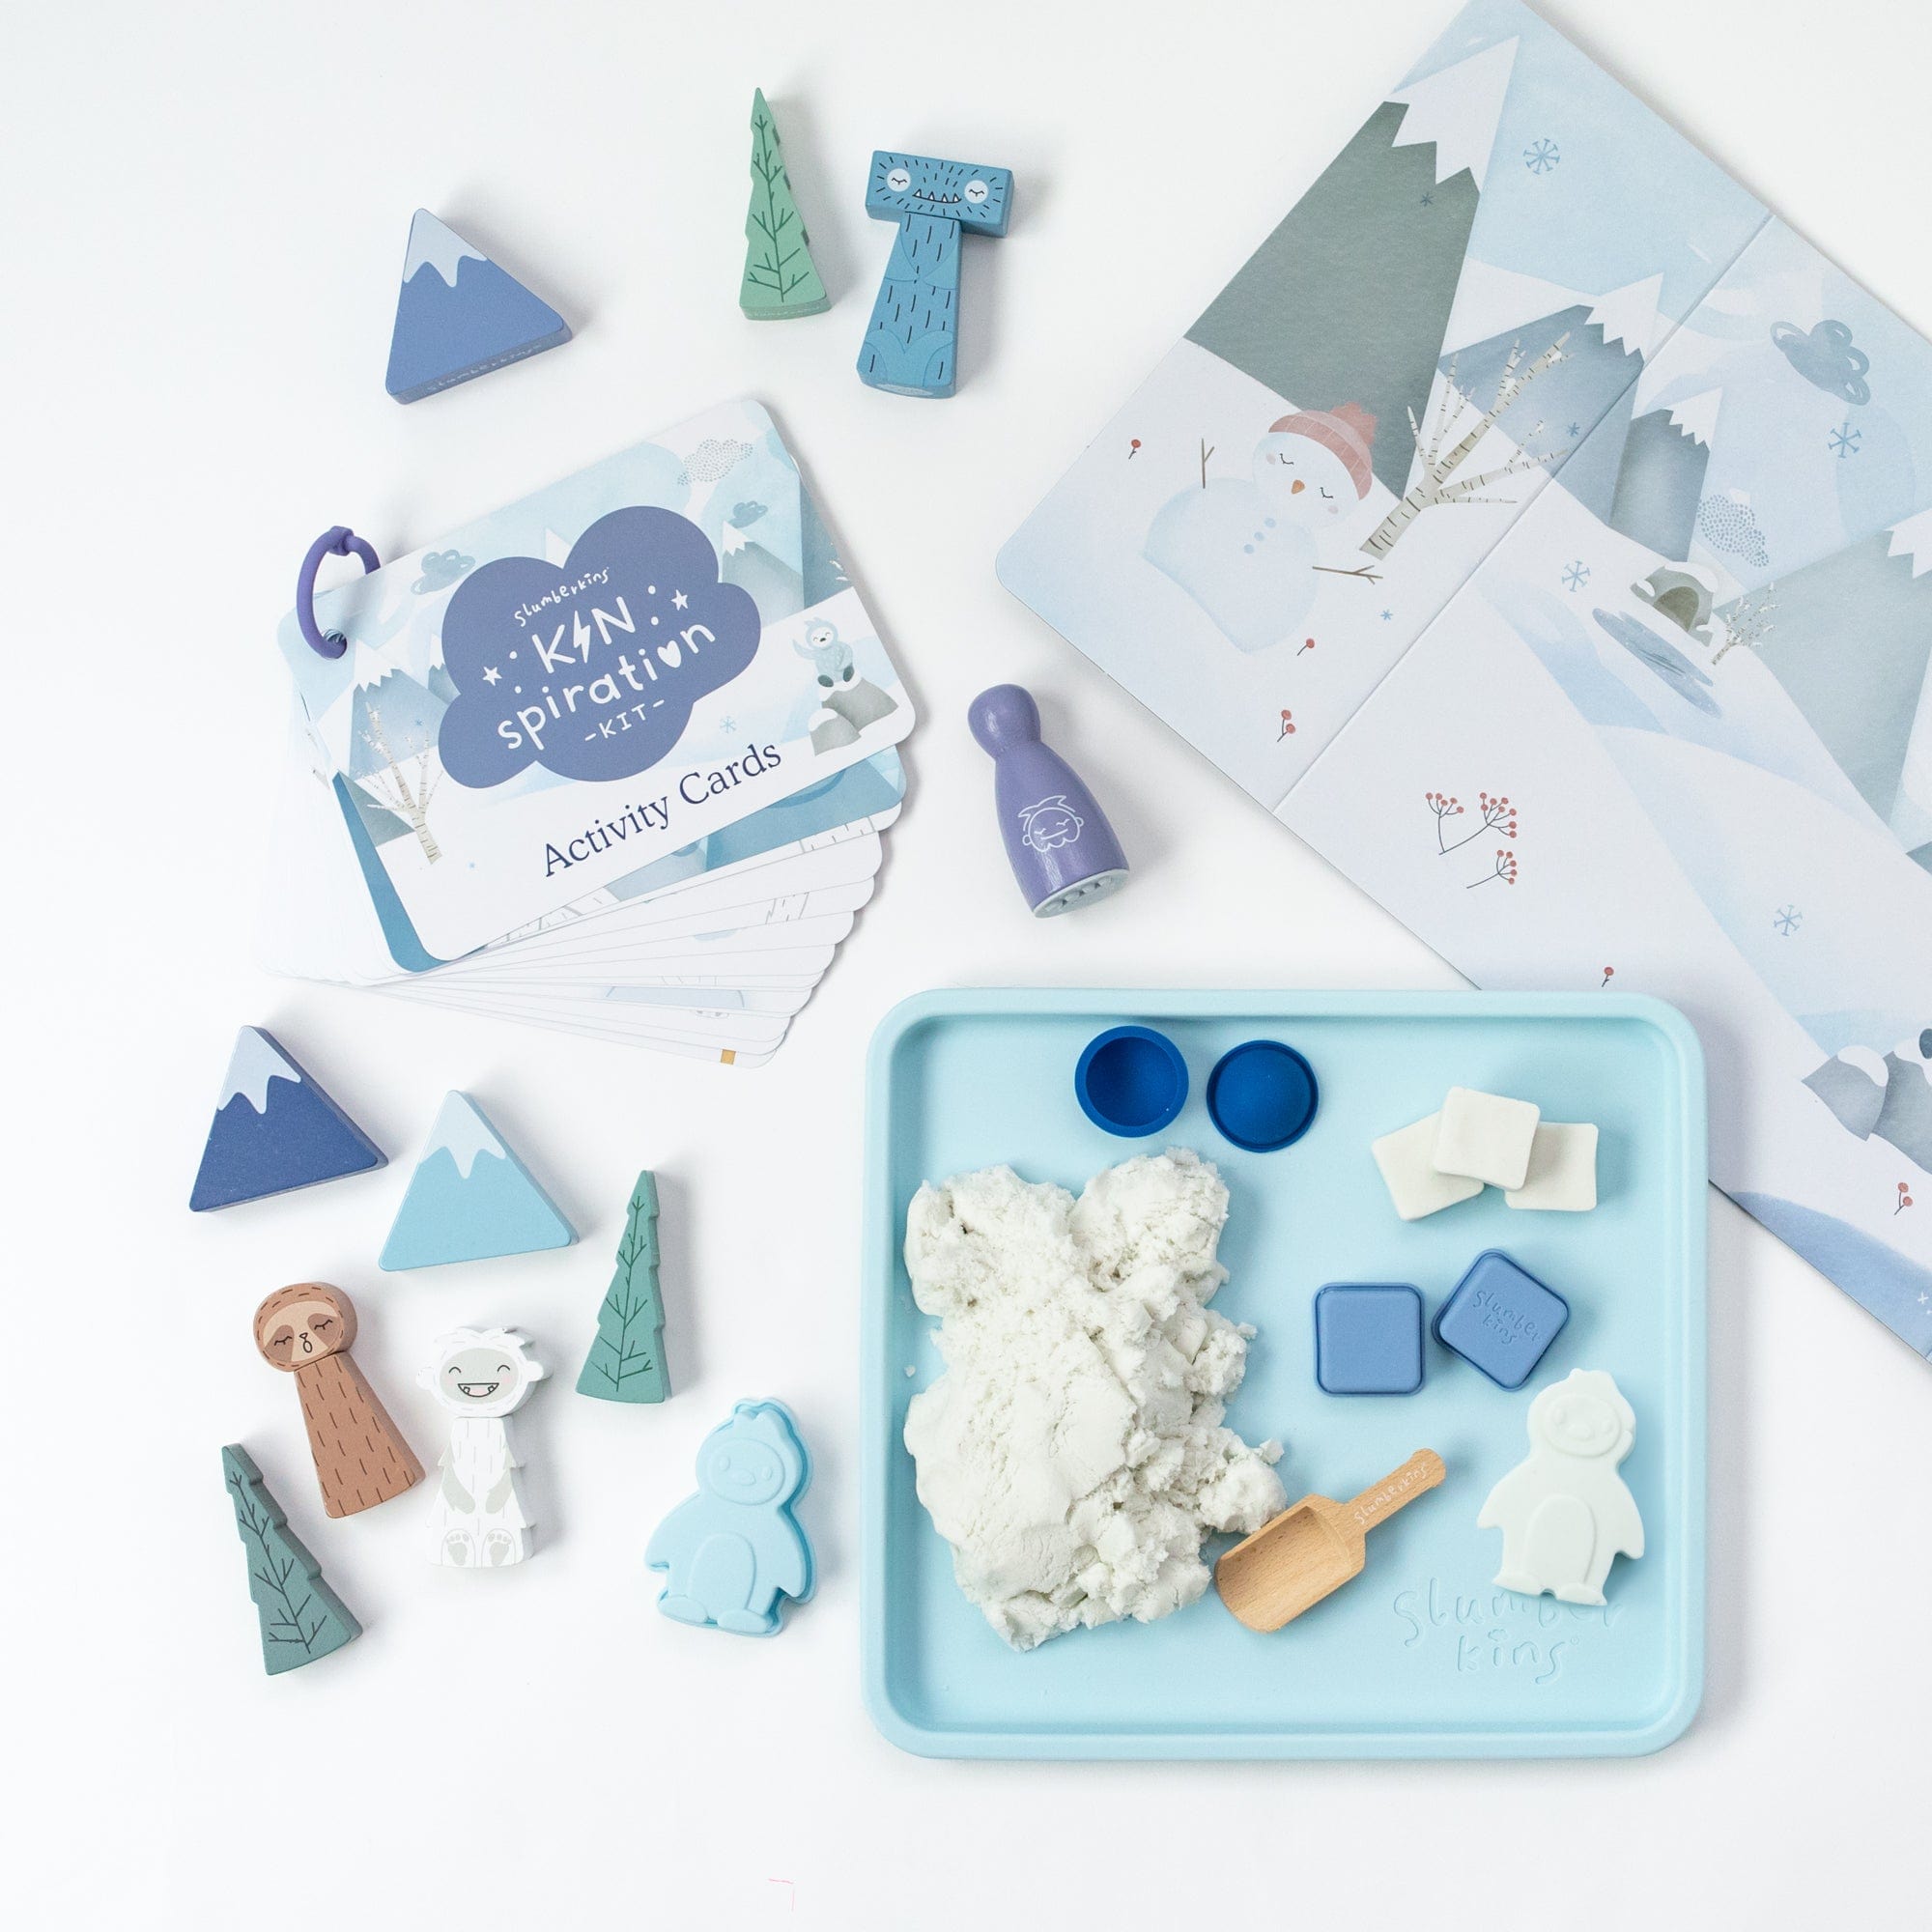 Kinspiration Kit 2-Box Set: Mindful & Expressive Play - View Product